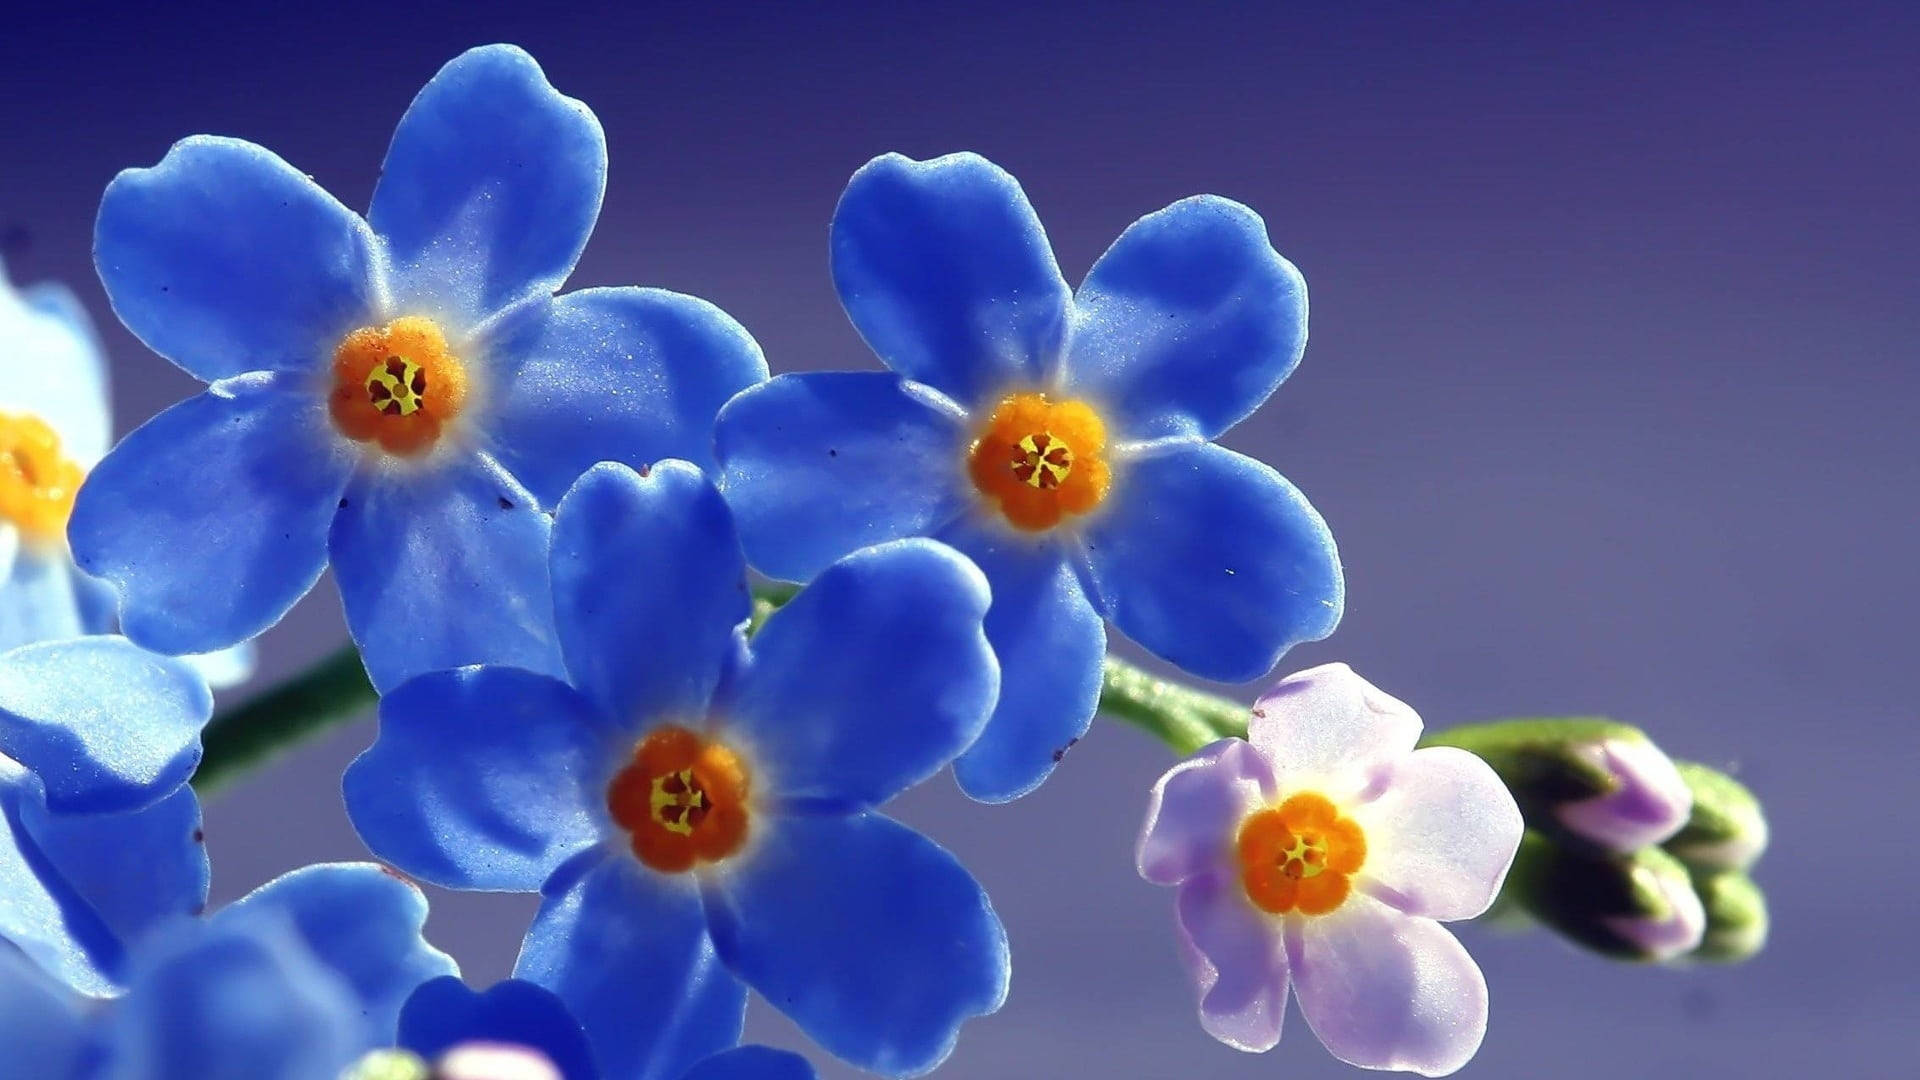 Blue Scorpio Grasses Flowers Background